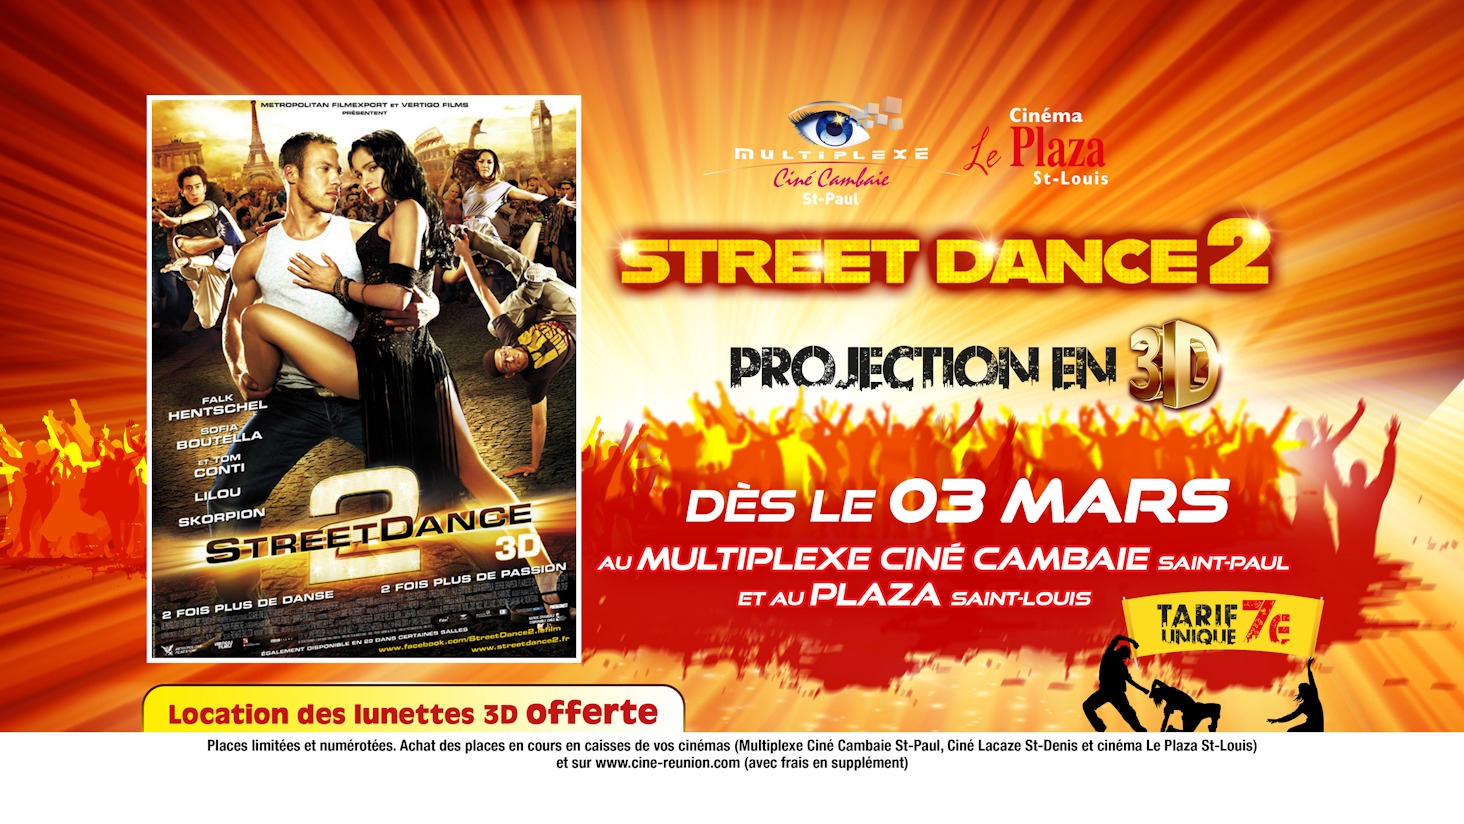 STREET DANCE 2 EN 3D